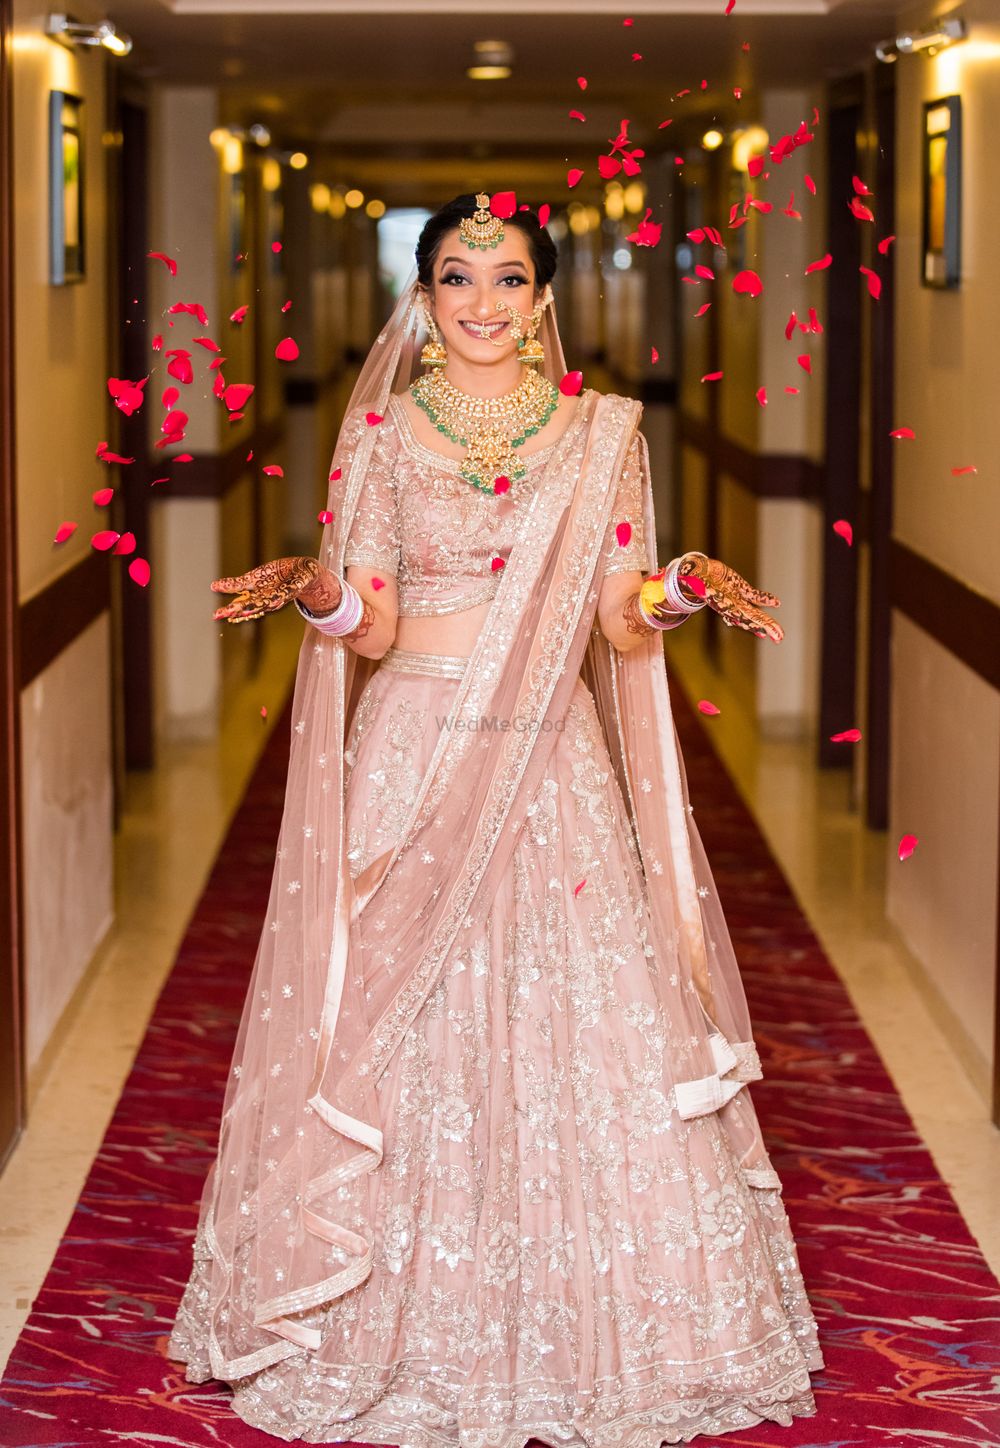 Photo of Happy bride in pastel pink lehenga and petals